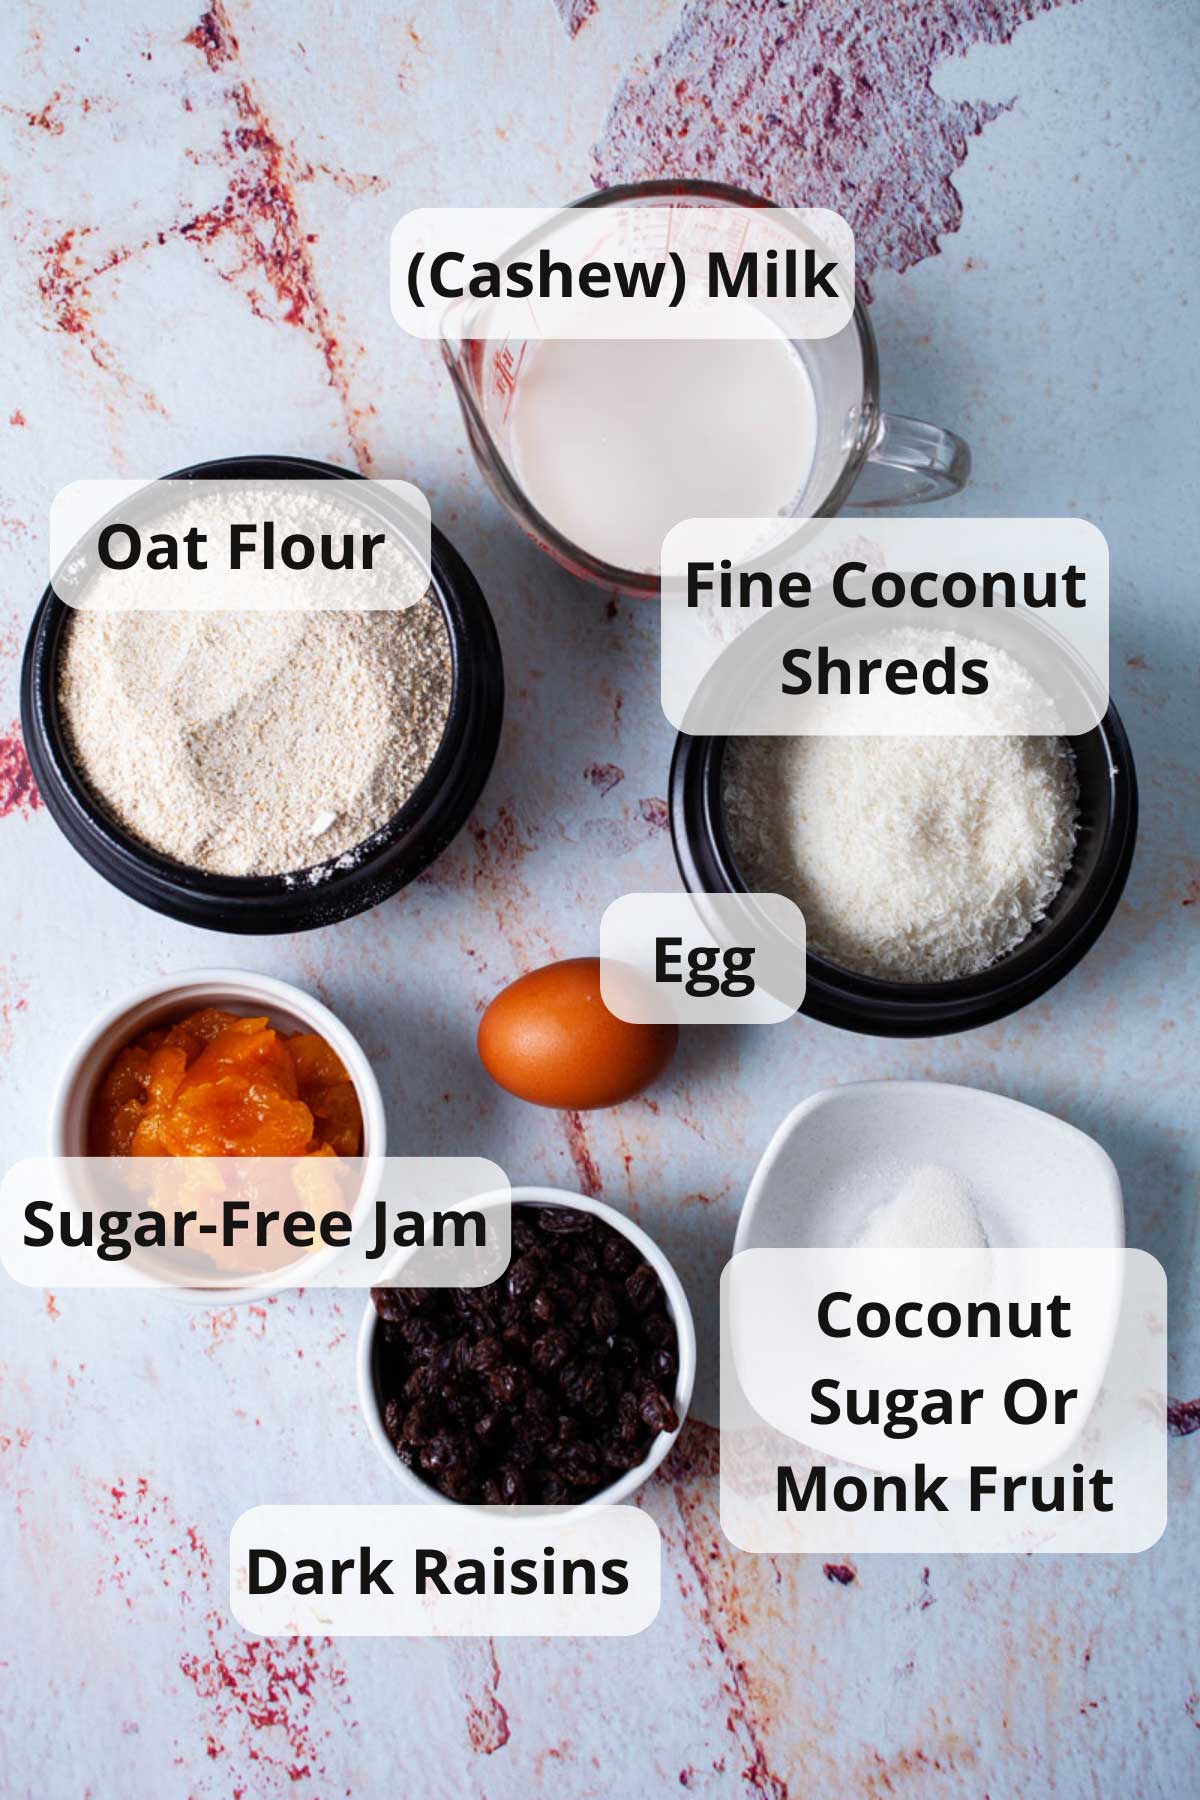 Cashew milk, oat flour, fine coconut shreds, egg, sugar, raisins, and apricot jam displayed on a table.